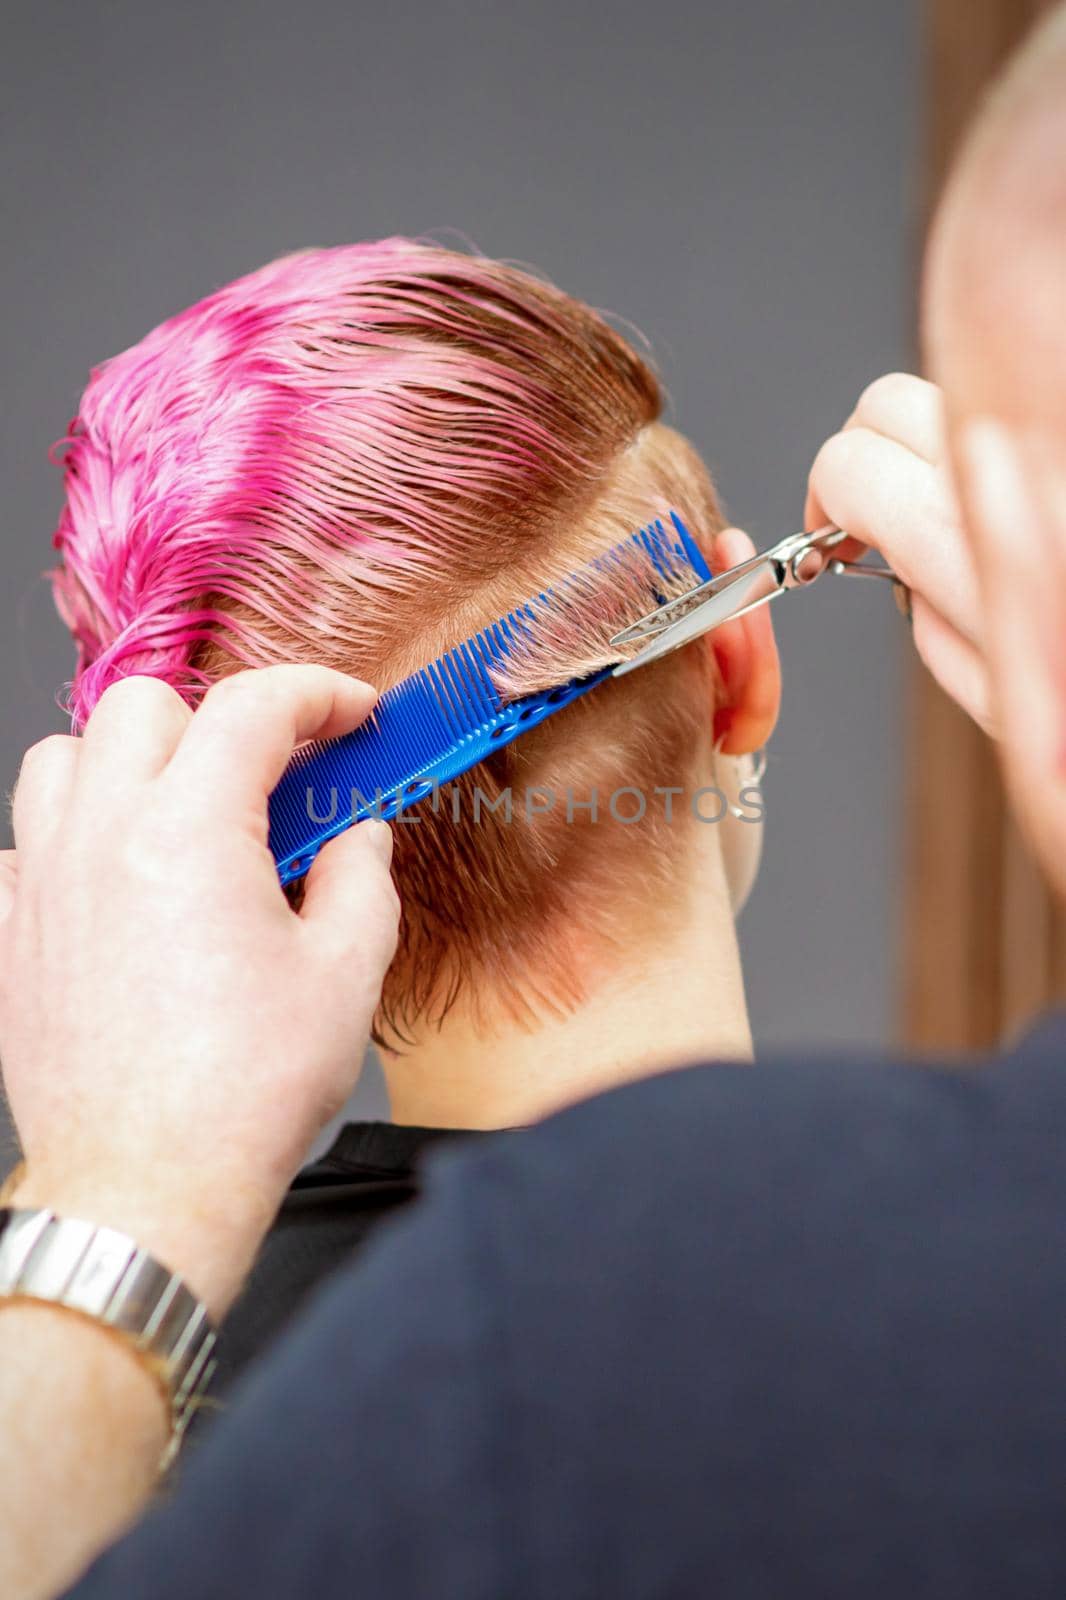 Woman having a new haircut. Male hairstylist cutting pink short hair with scissors in a hair salon. by okskukuruza